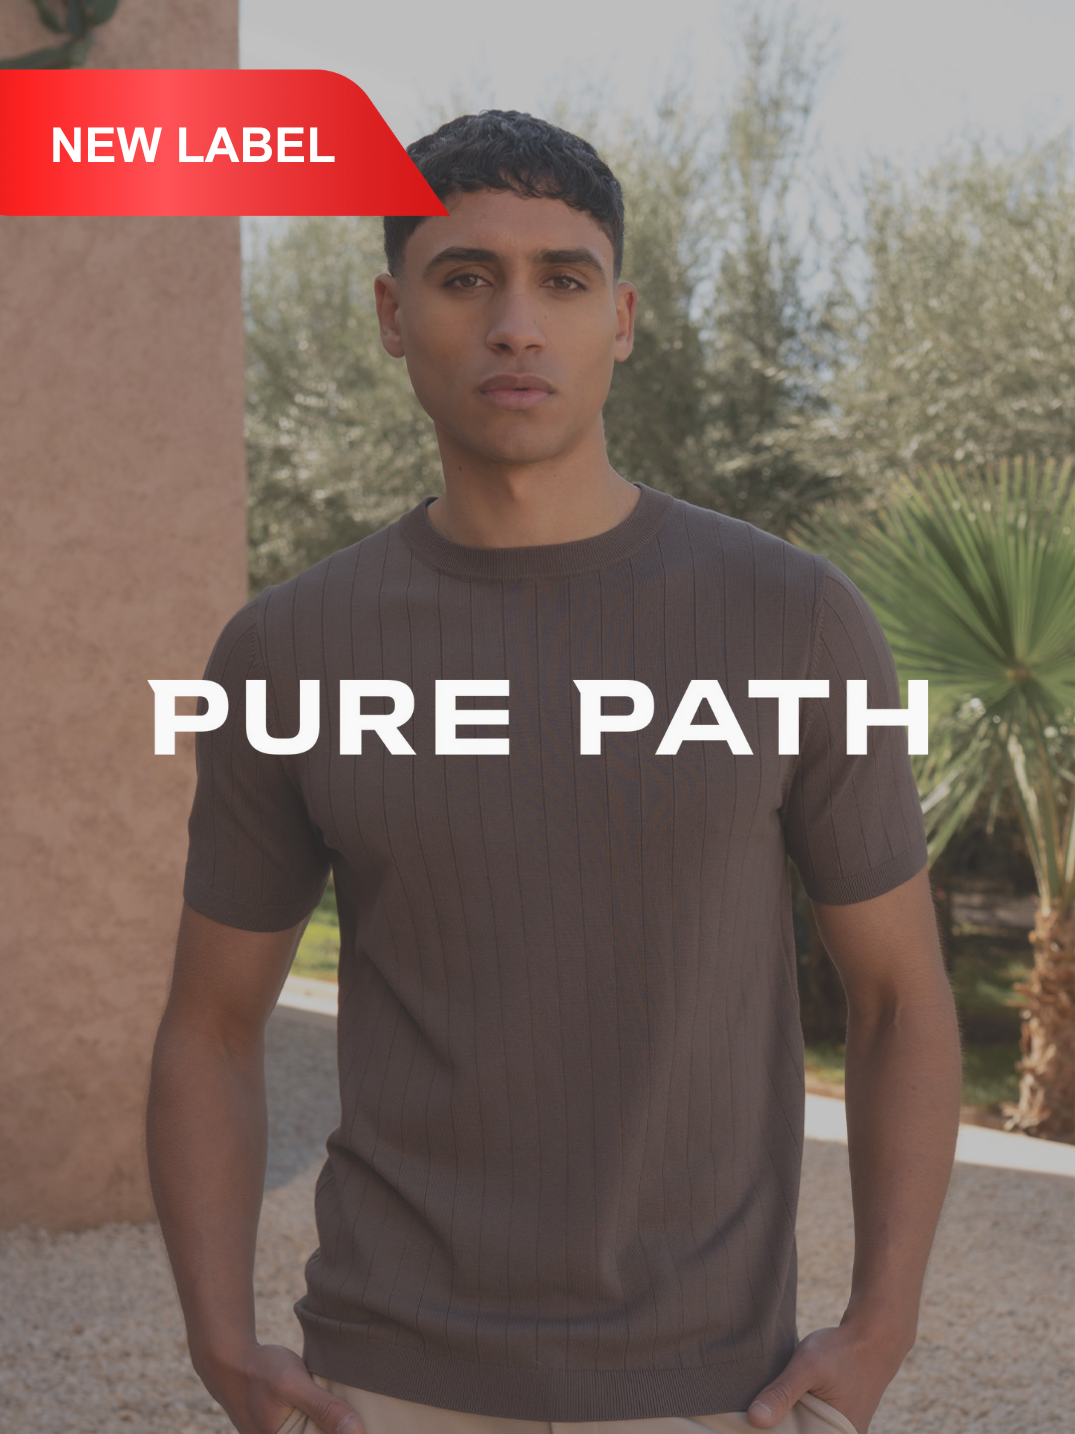 Pure path